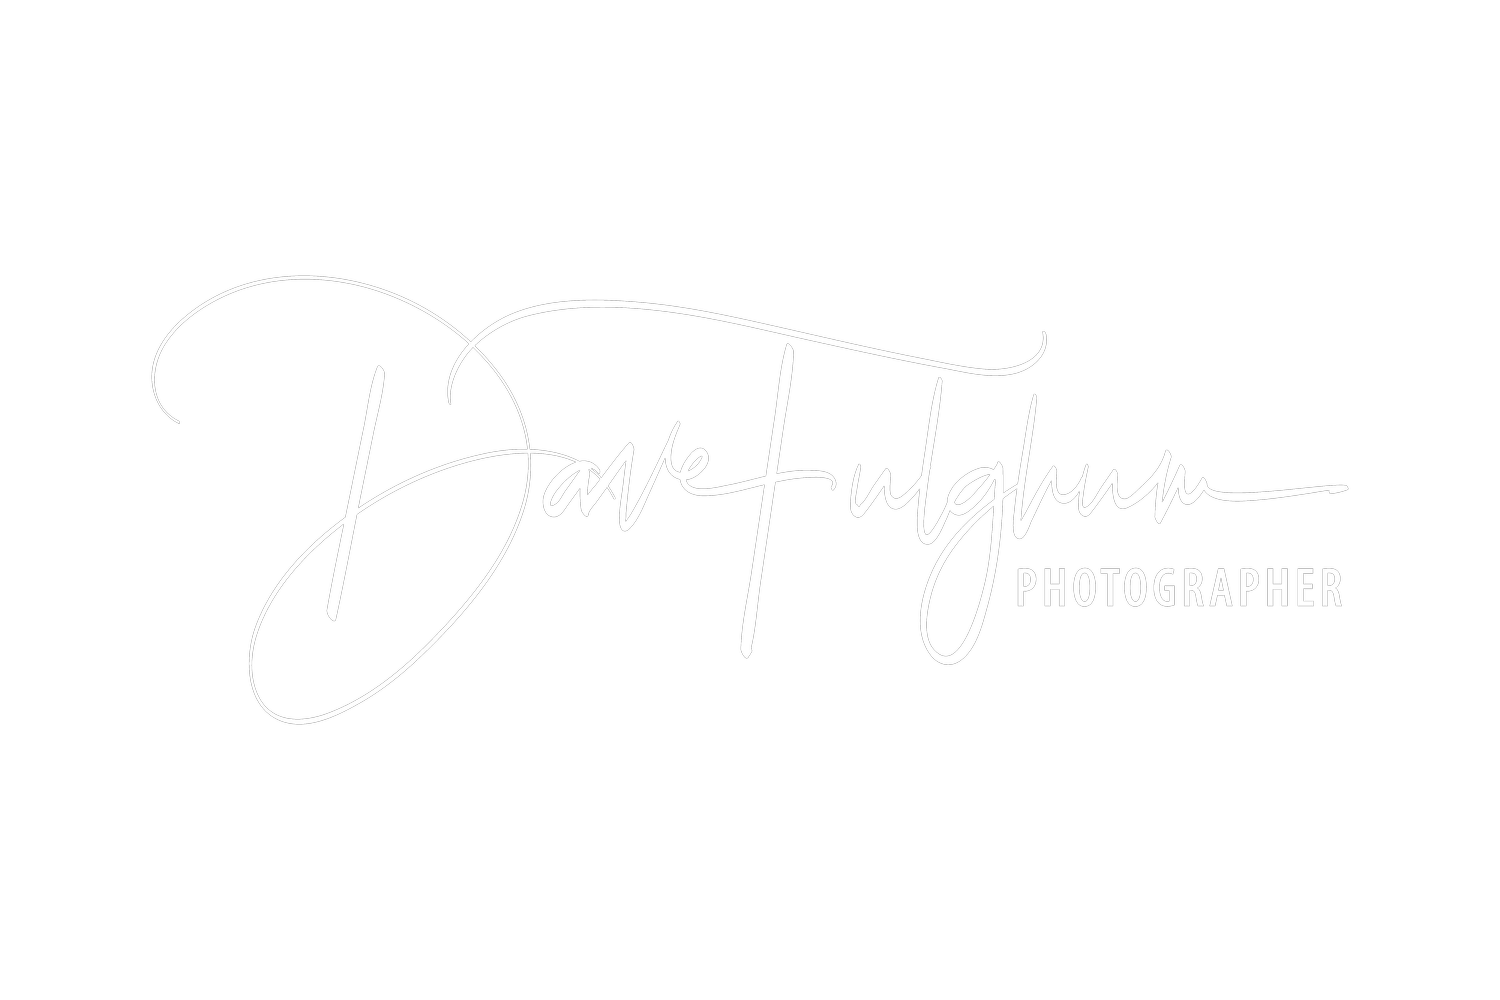 Dave Fulghum: Image maker